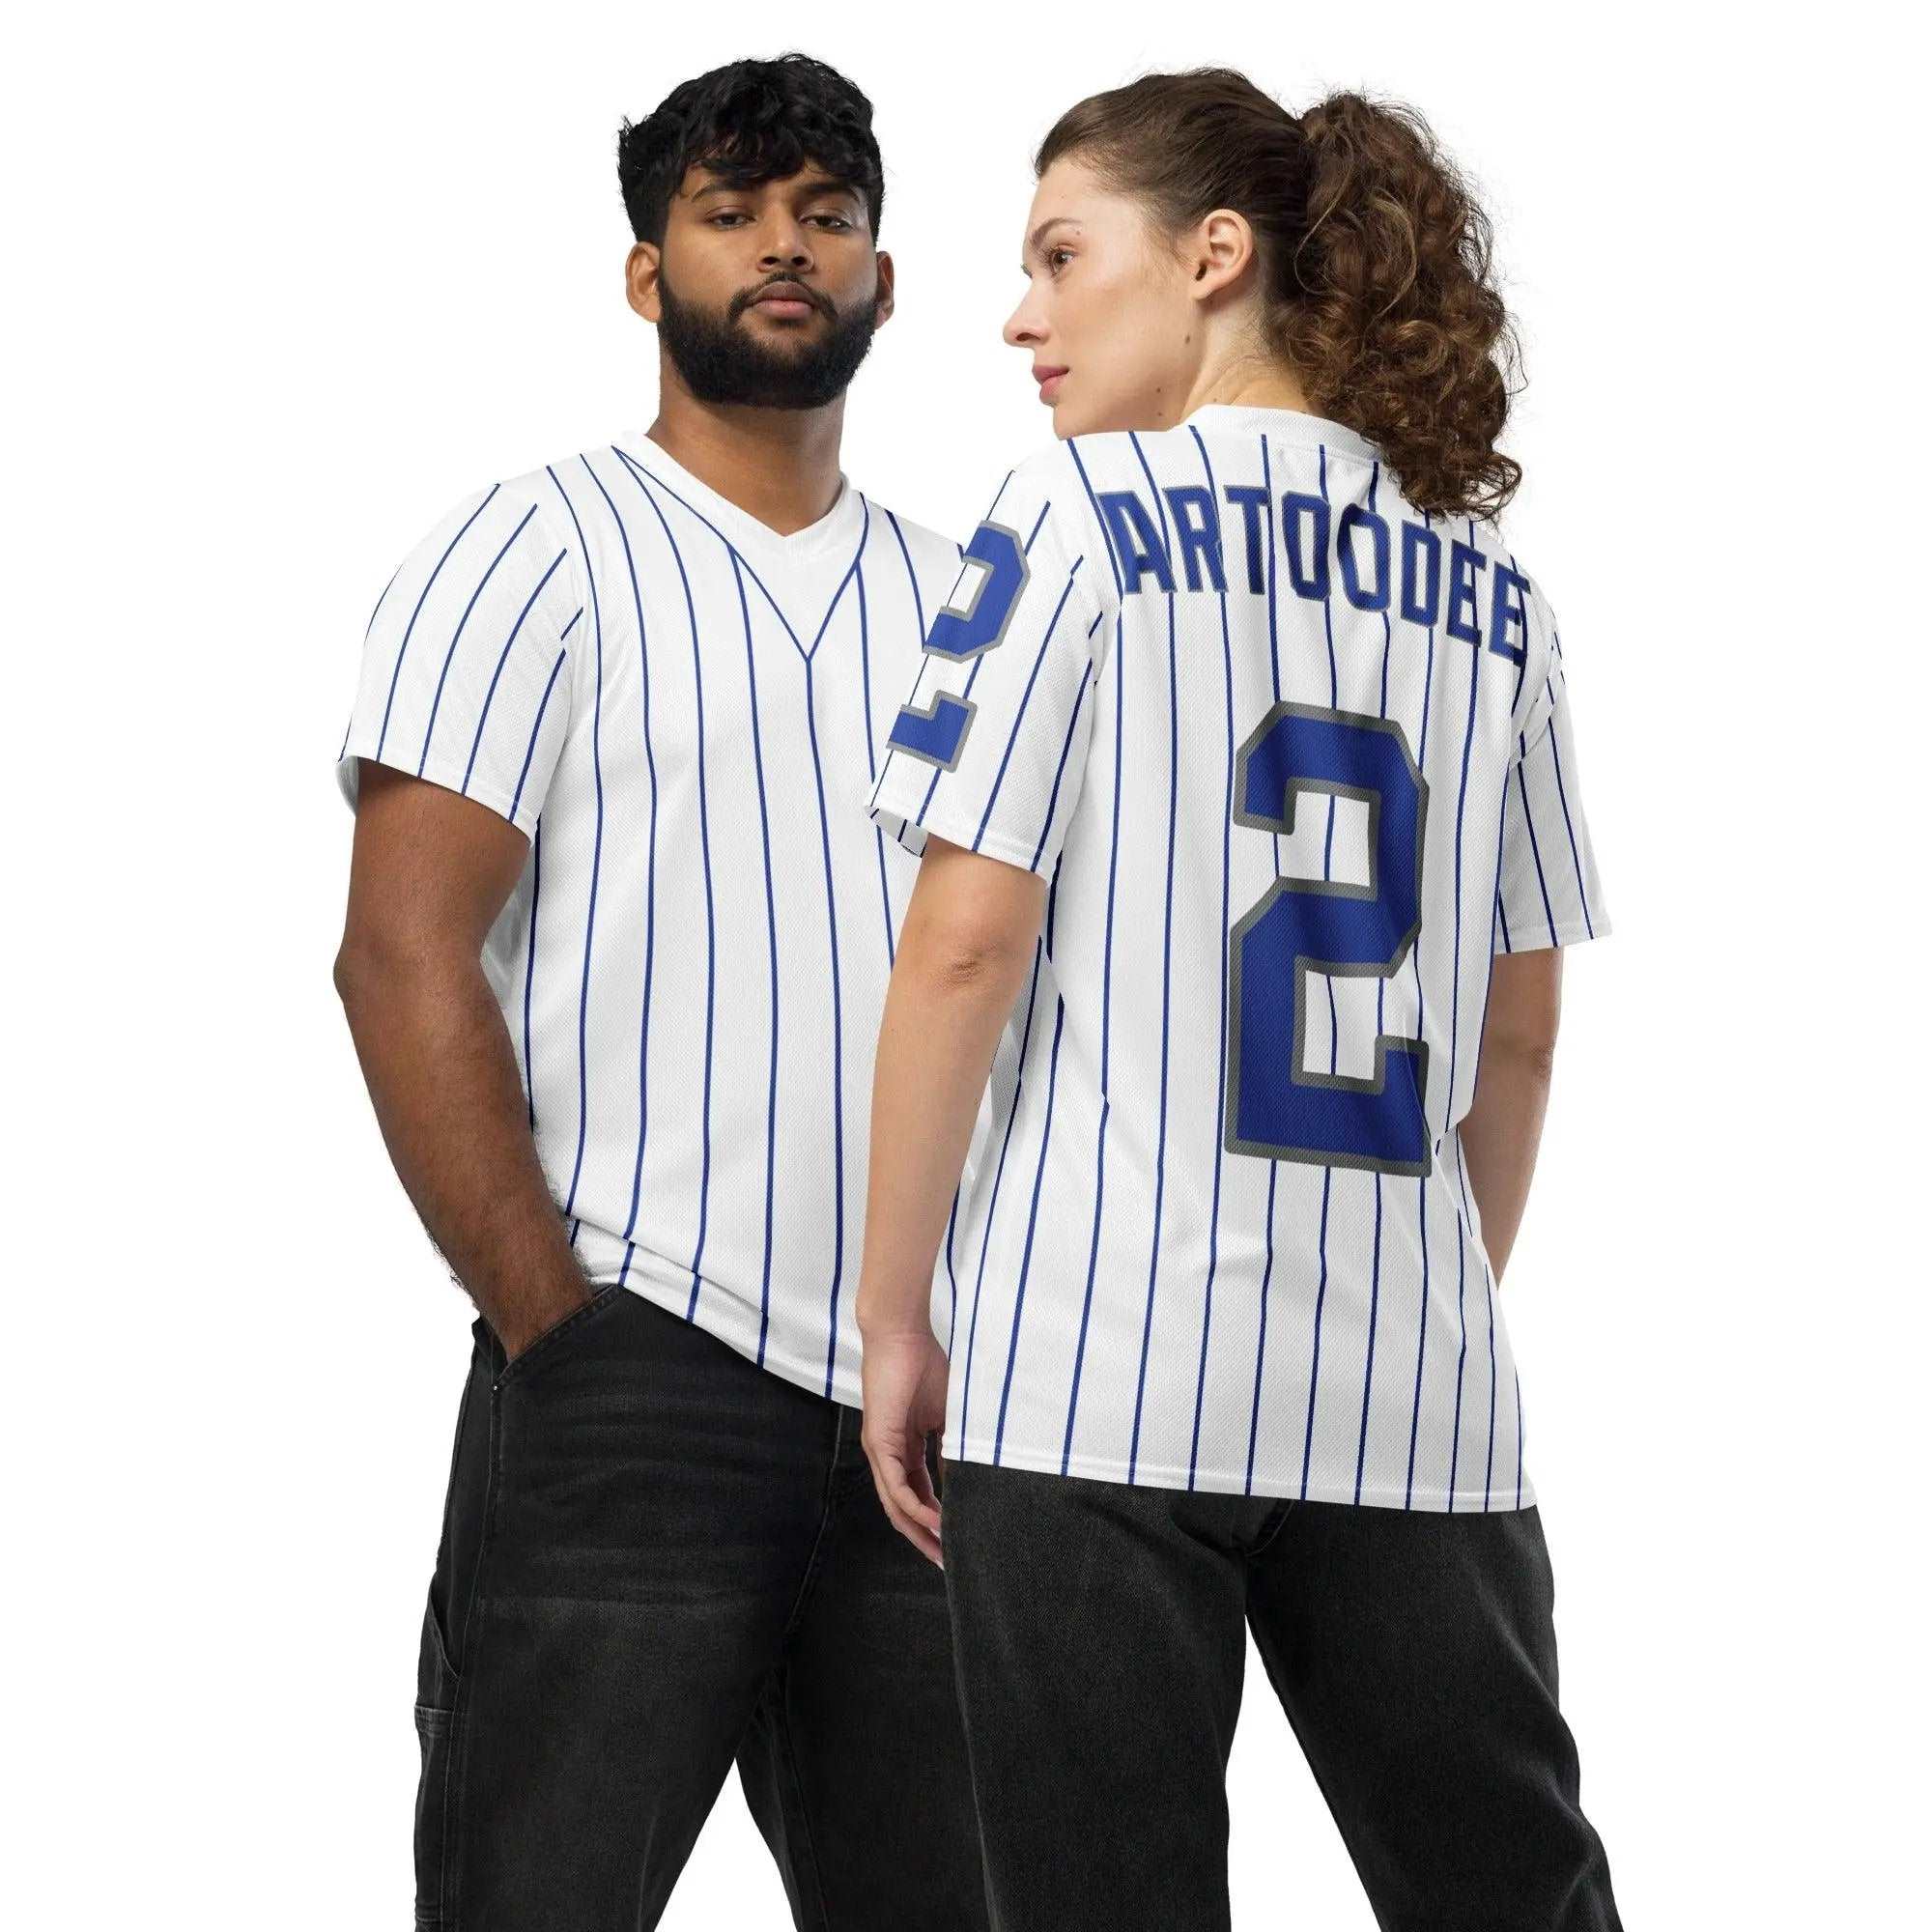 Artoodee #2 Baseball Recycled unisex sports jersey